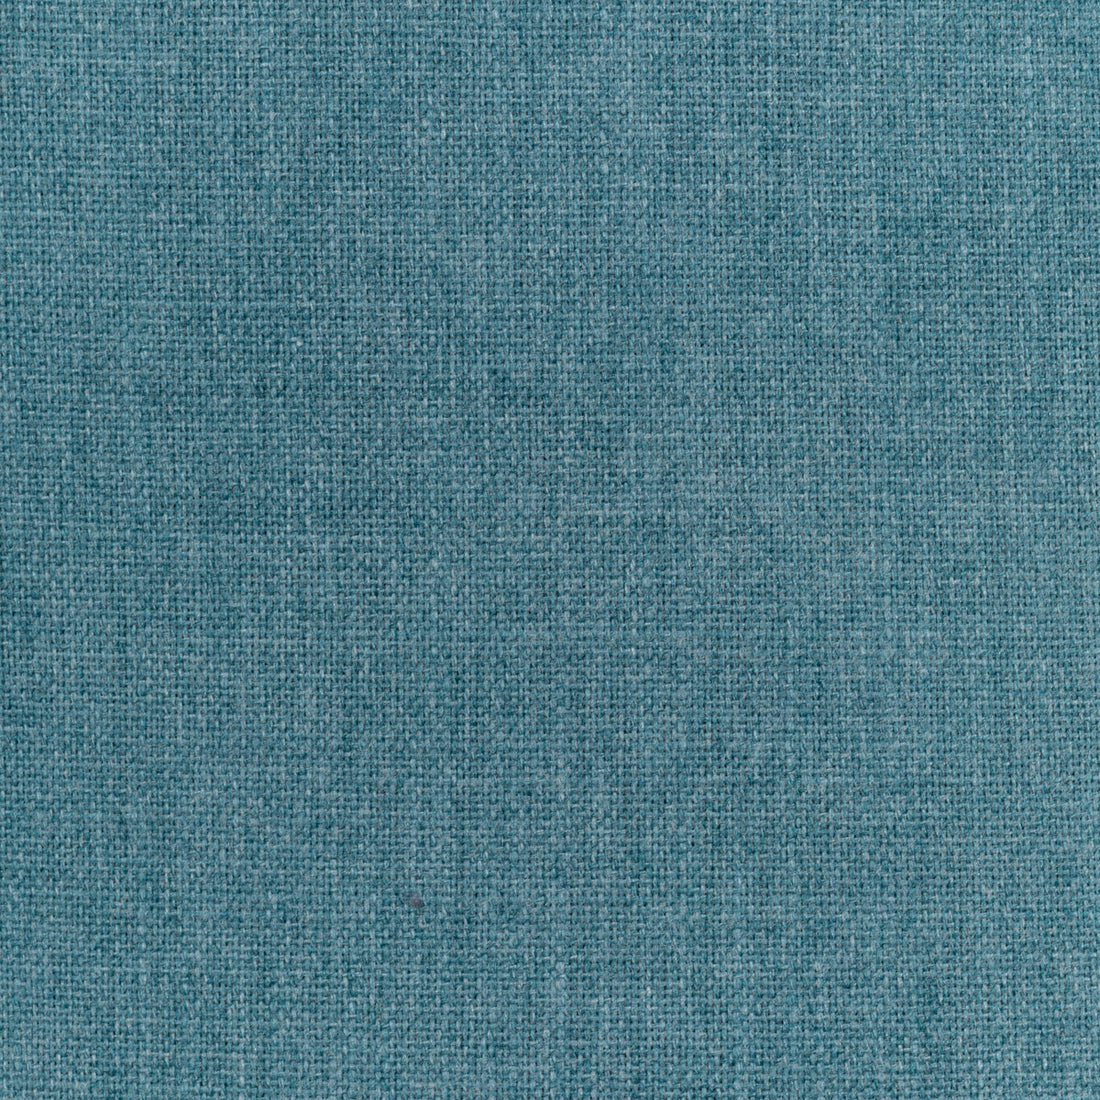 Kravet Smart fabric in 36112-5 color - pattern 36112.5.0 - by Kravet Smart in the Performance Kravetarmor collection